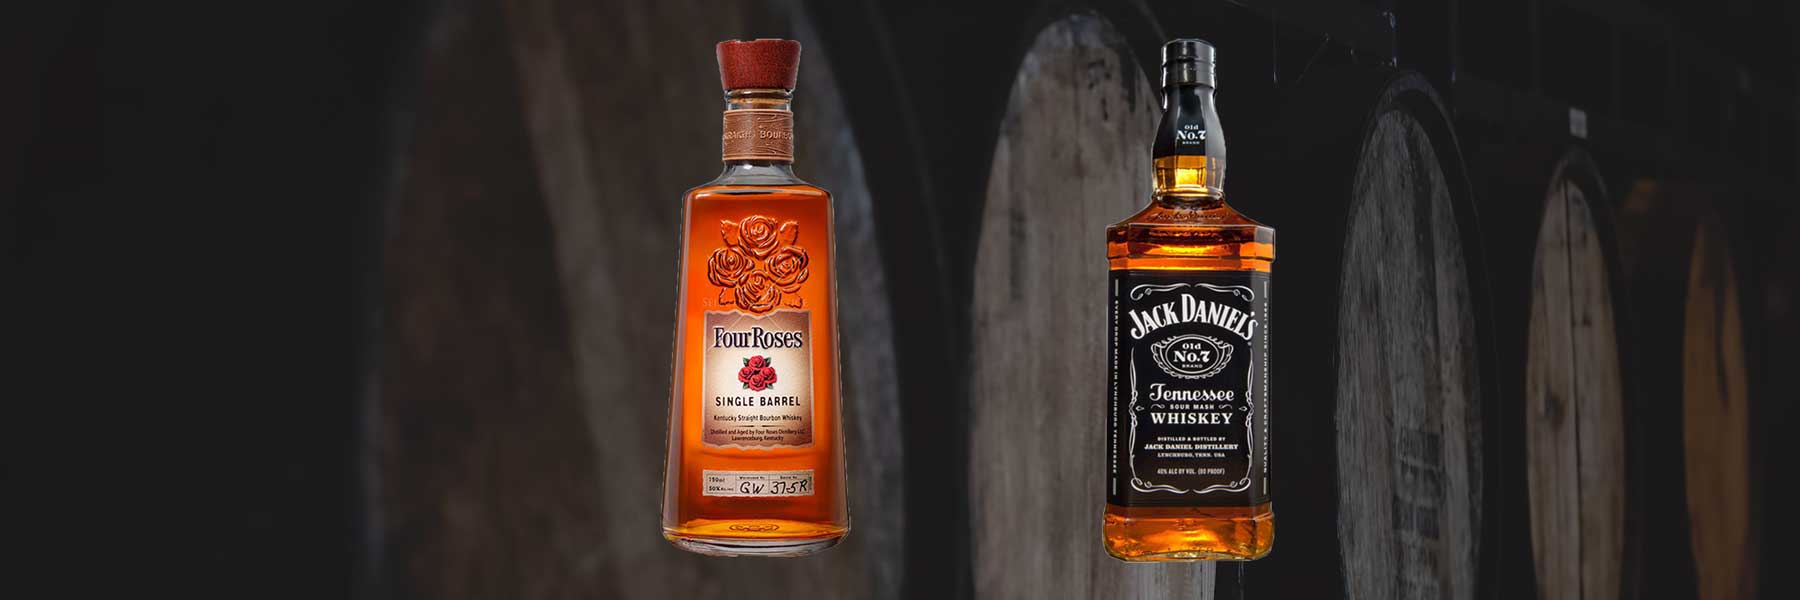 Four Roses vs Jack Daniels | Comparing Single barrel & Old No.7